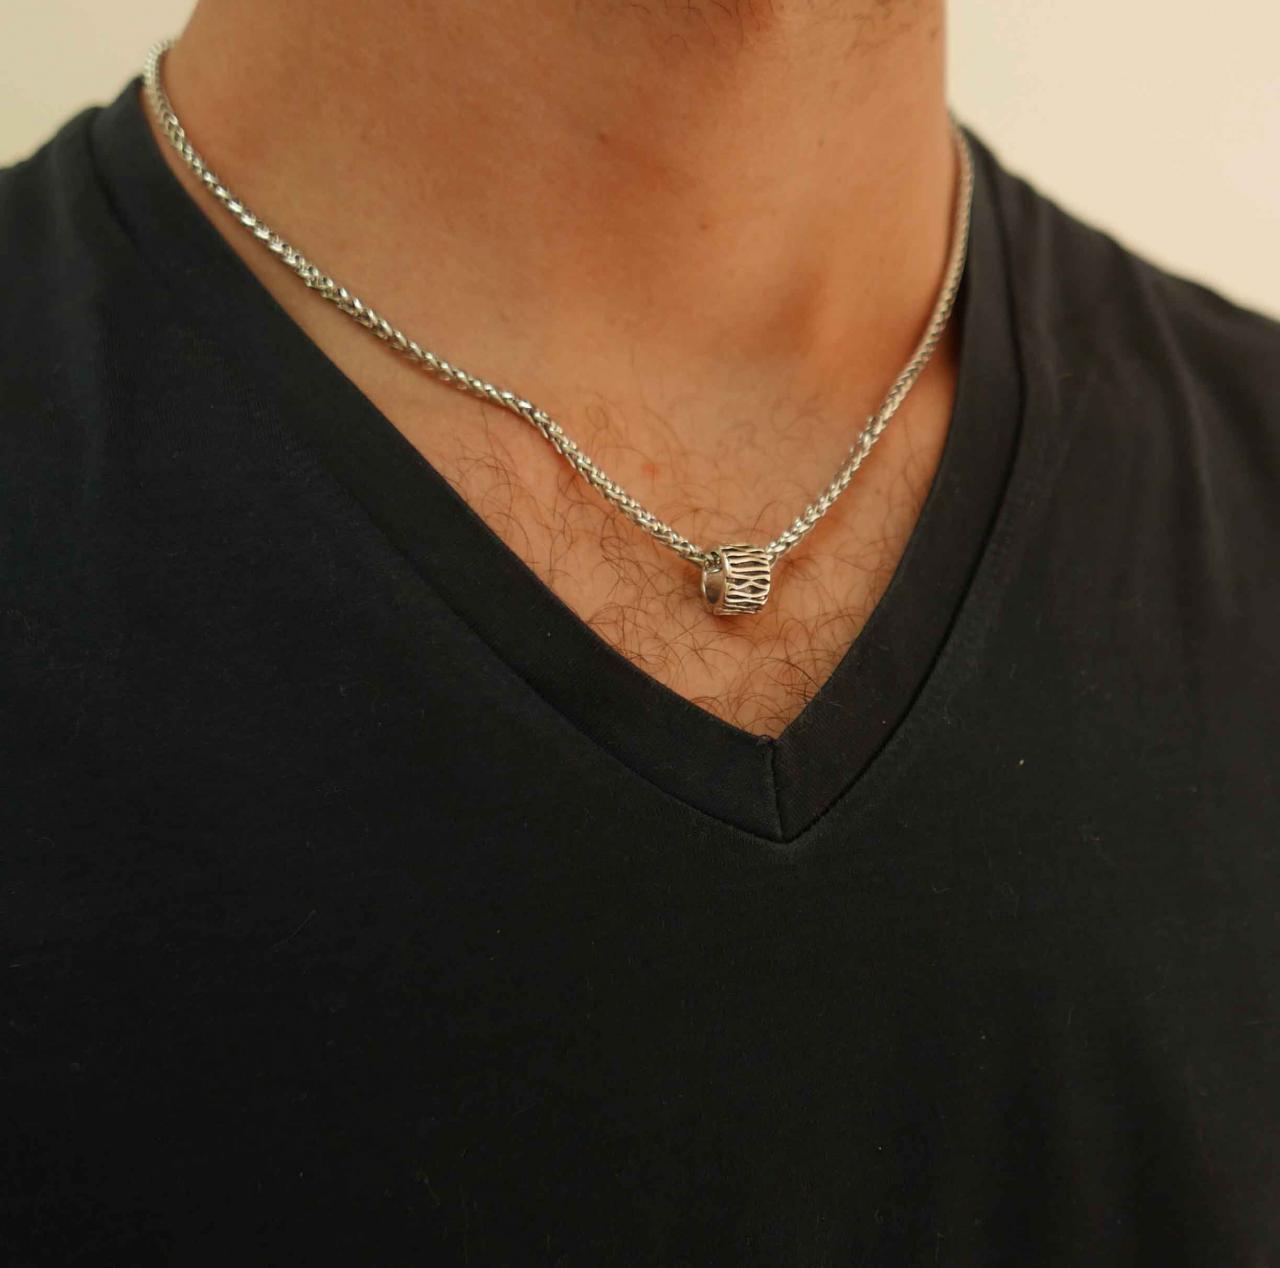 Men's Necklace - Men's Beaded Necklace - Men's Stainless Steel Necklace - Mens Jewelry - Men's Gift - Husband